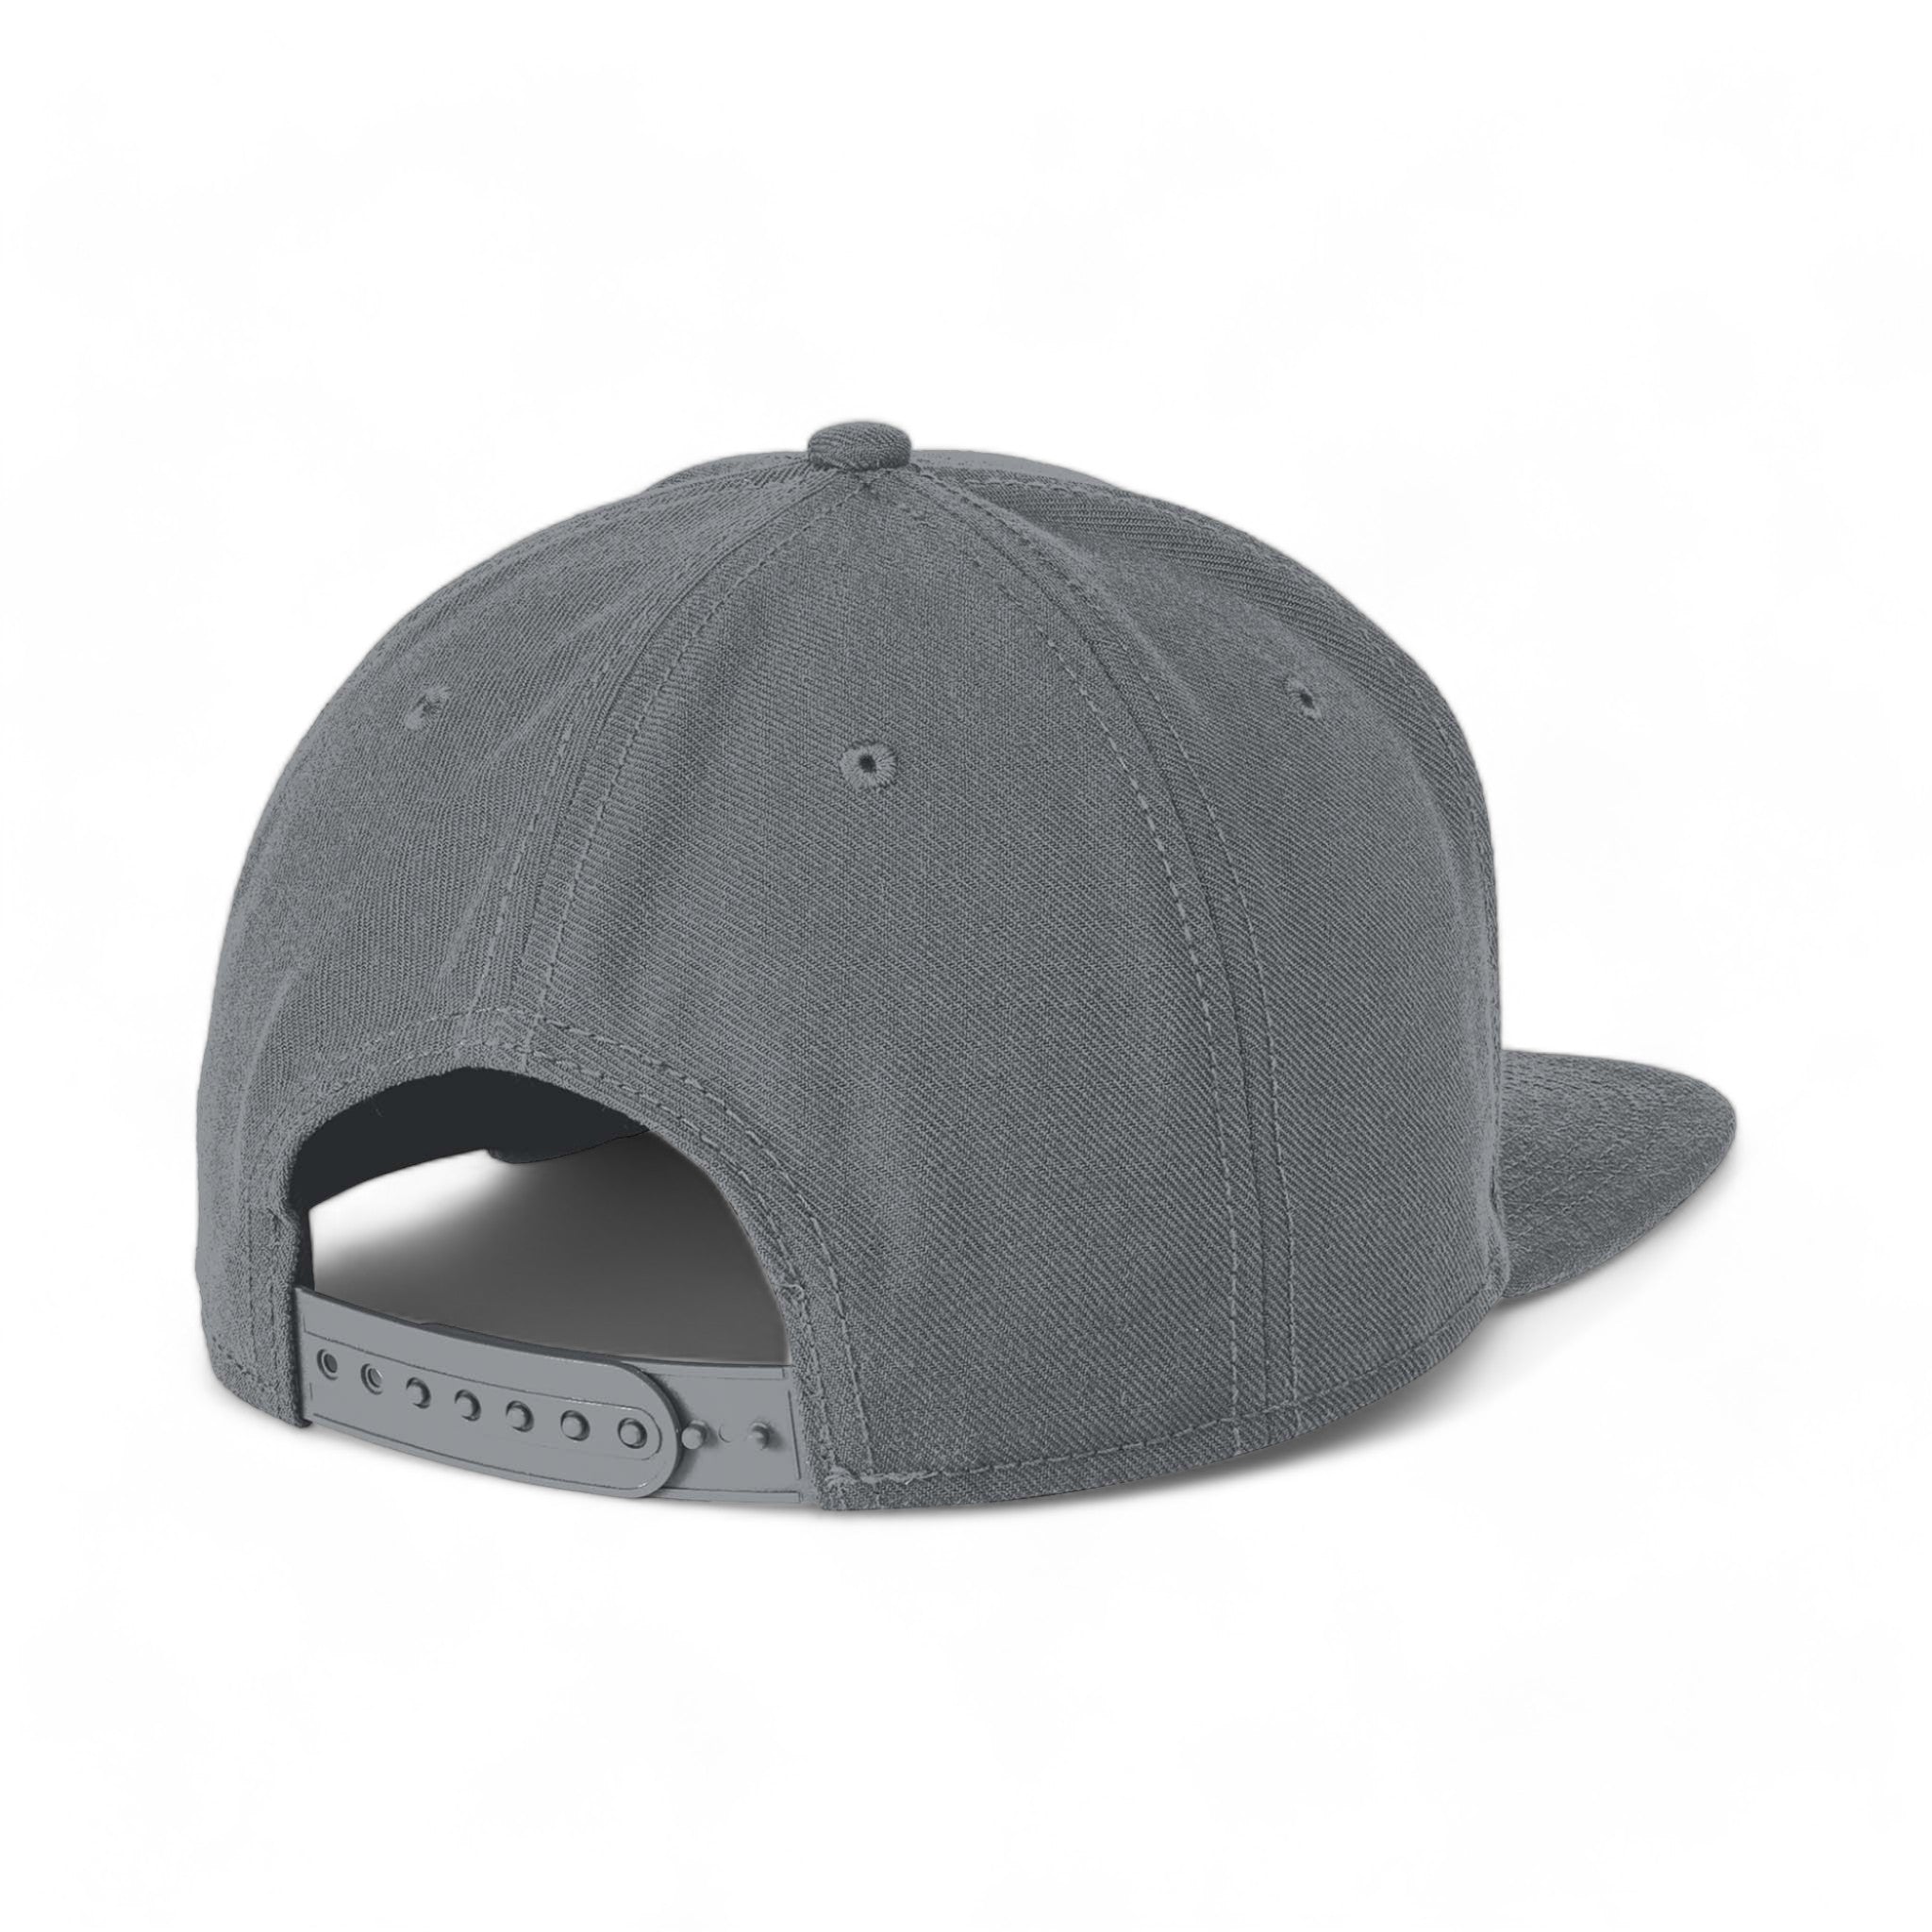 Back view of New Era NE402 custom hat in graphite